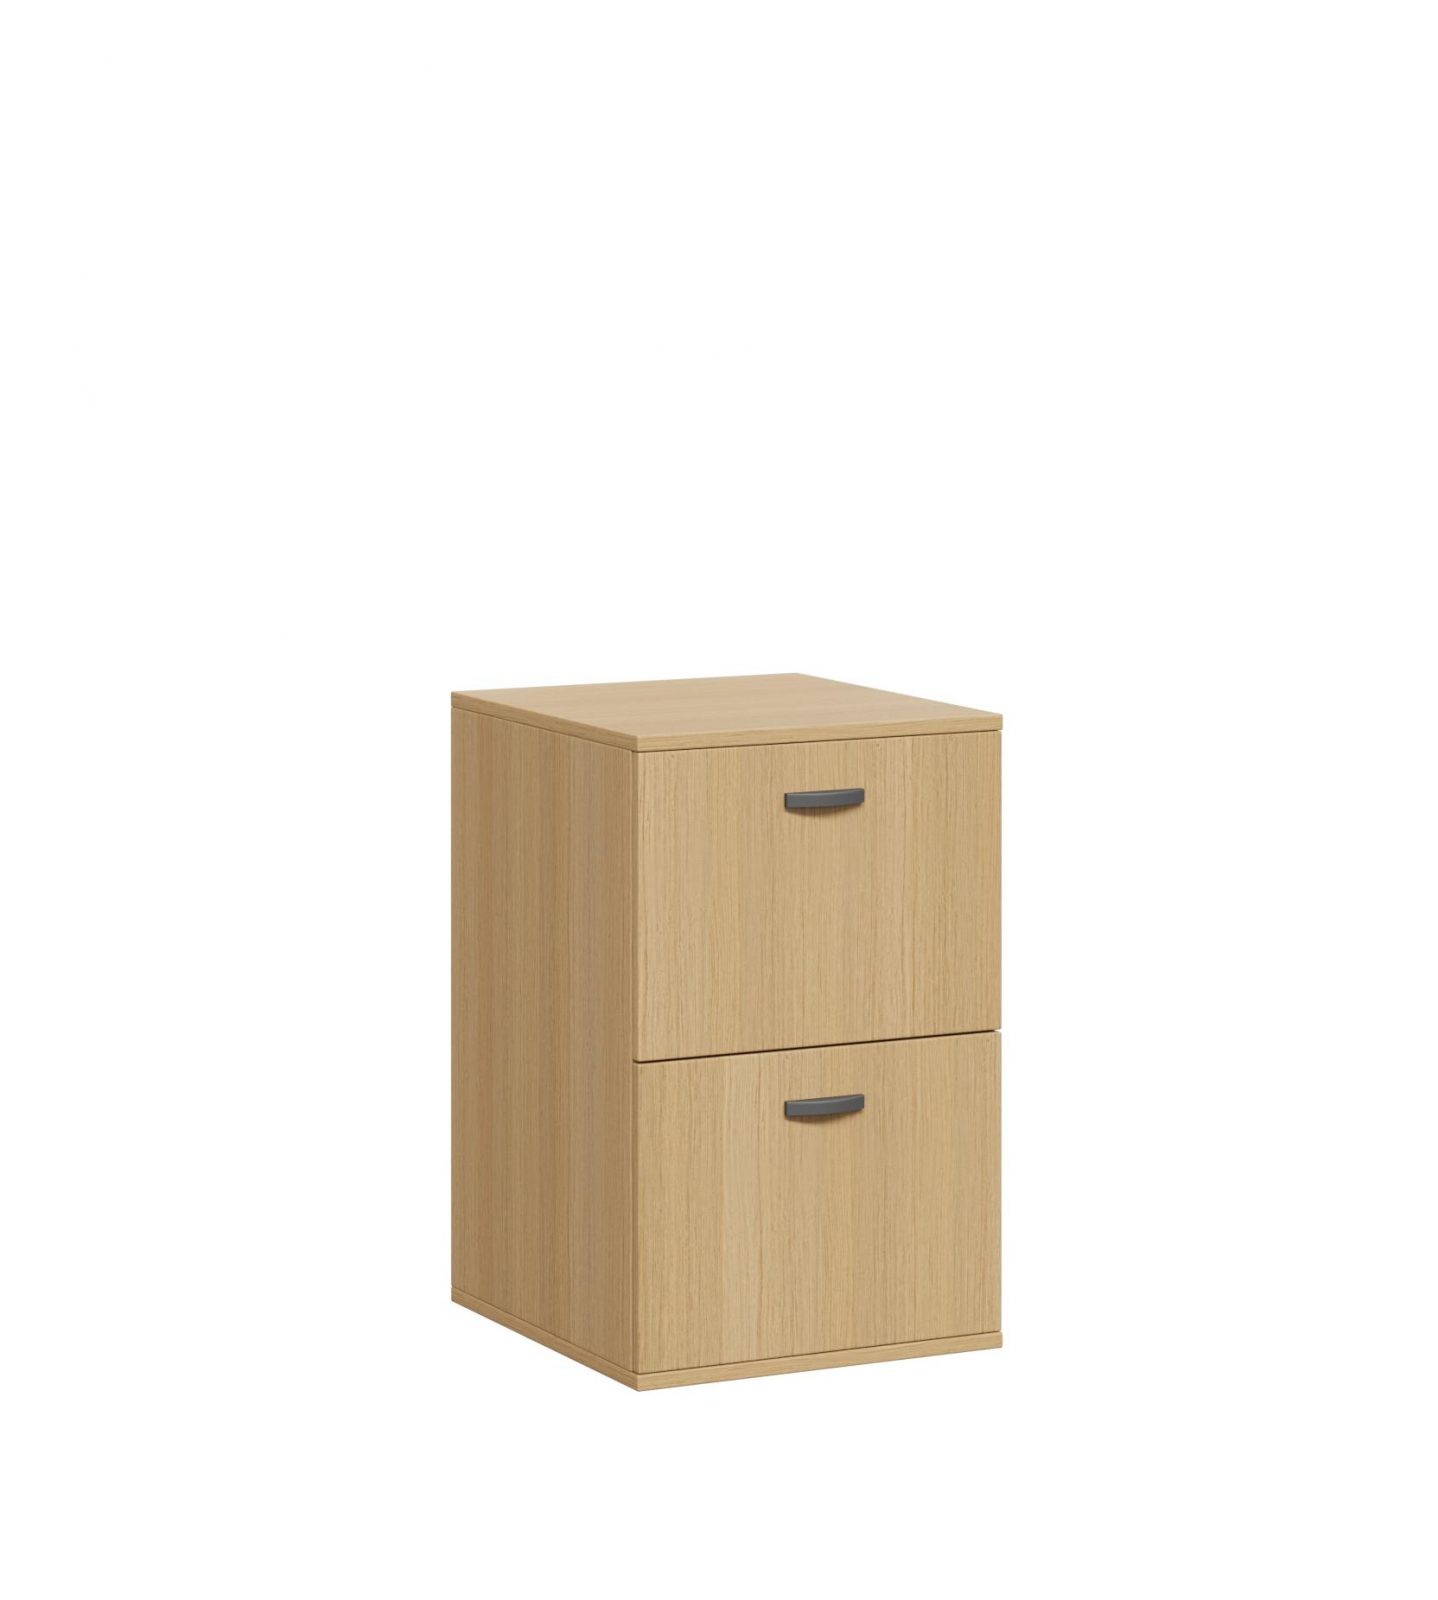 DD Filing Cabinet – 2 Drawer